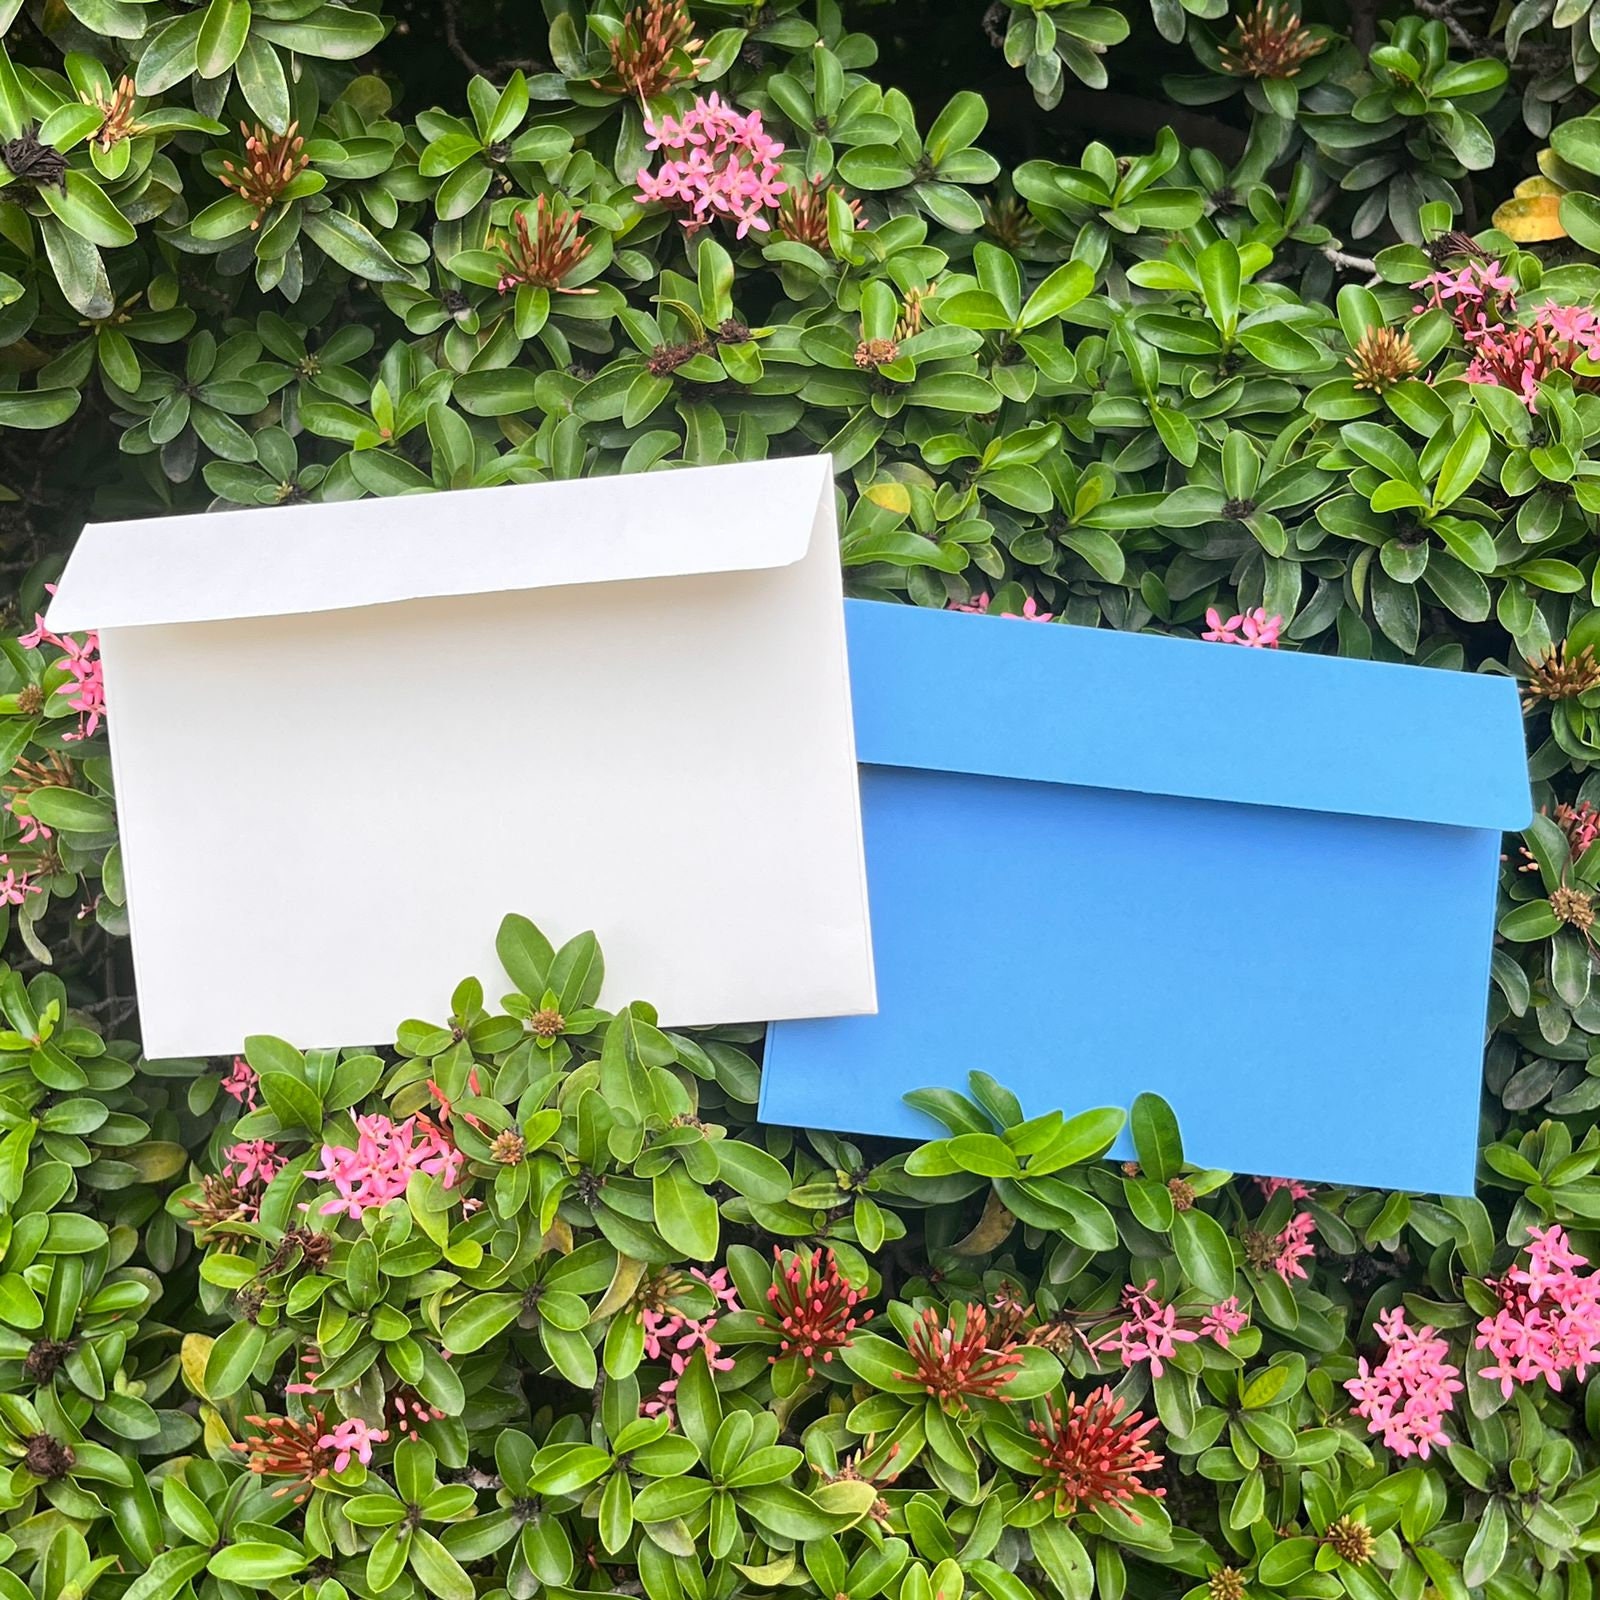 10 White Coin Envelopes, Small Envelopes, Coin Envelopes Set of 10